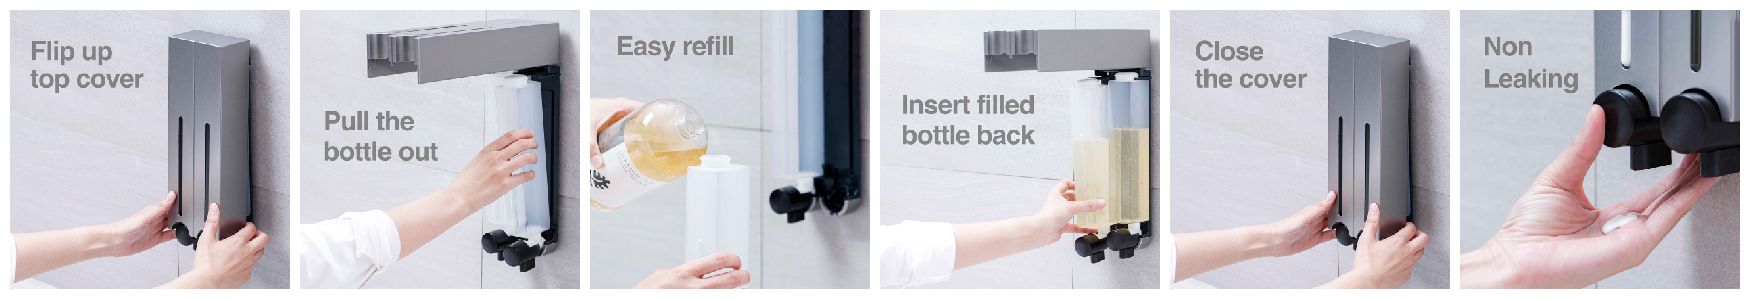 Quick Replace & Refill Soap Dispenser.